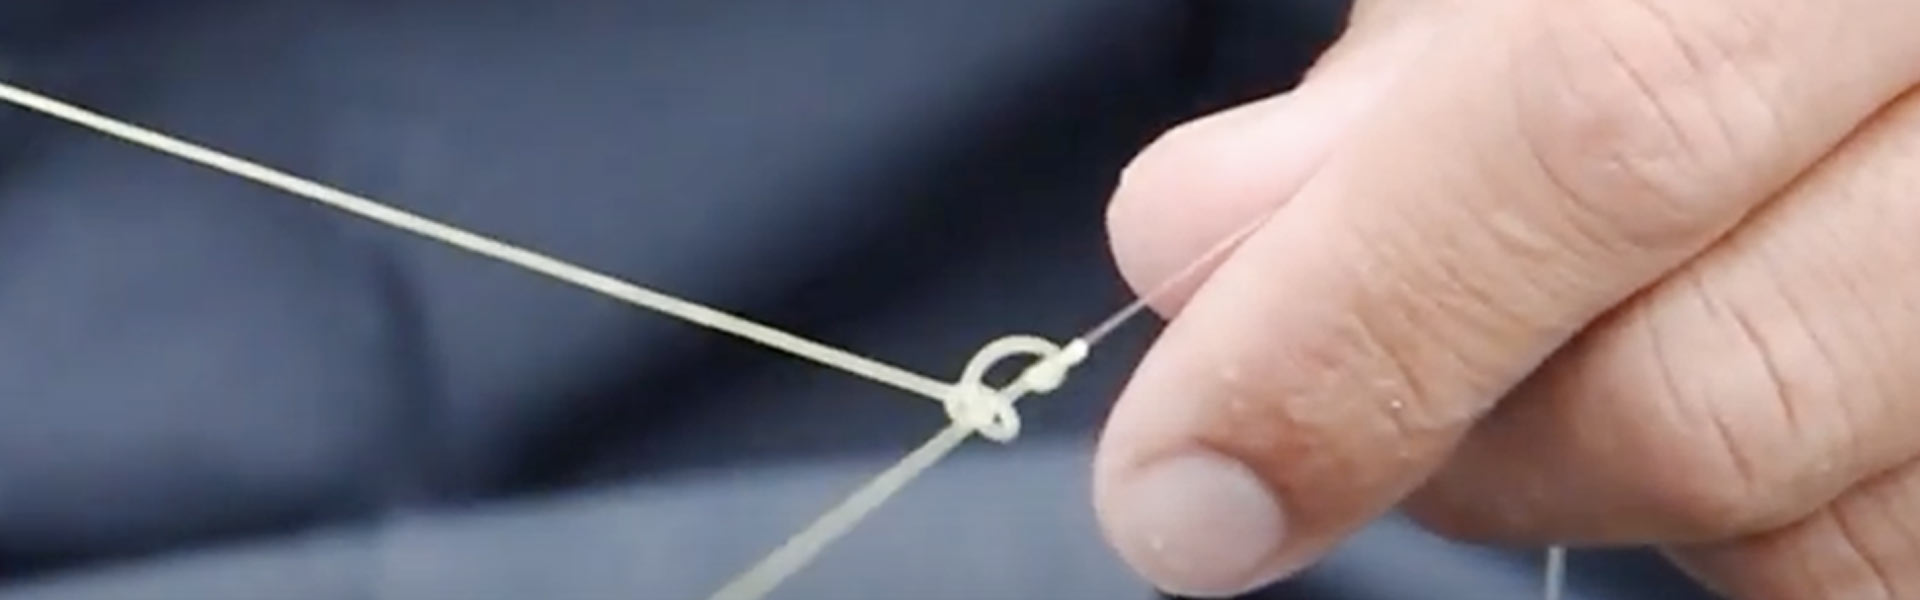 Seaguar 101: Tying a Palomar Knot